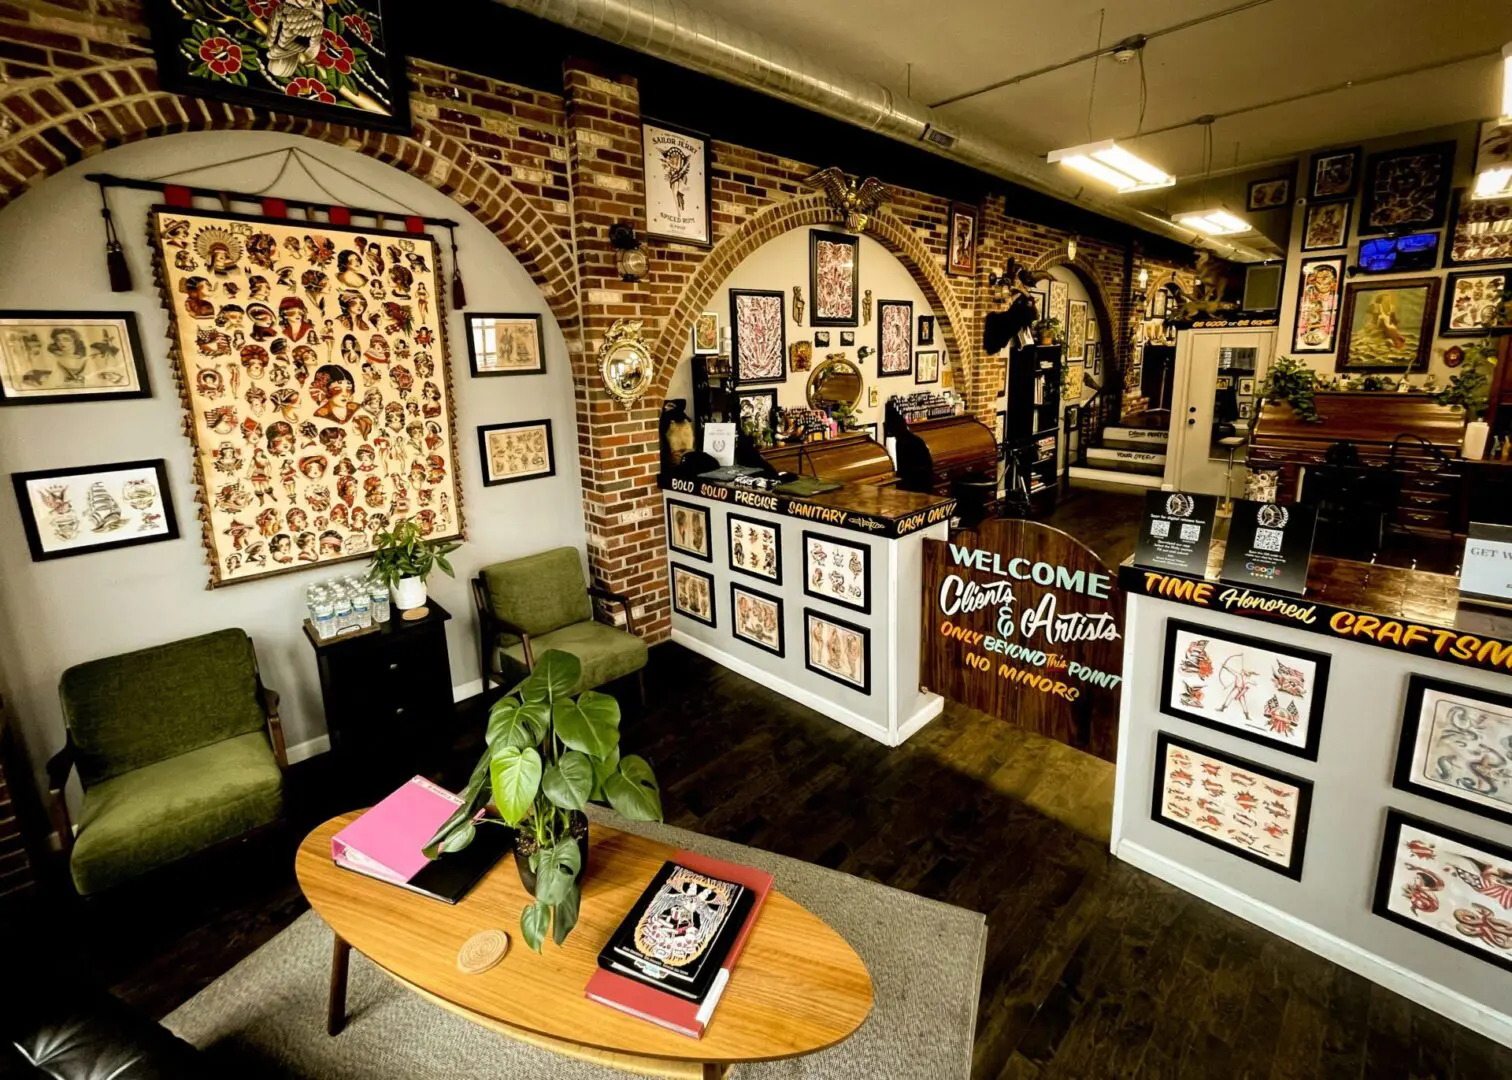 Lobby of Philadelphia tattoo shop with tattoo flash hung on the walls